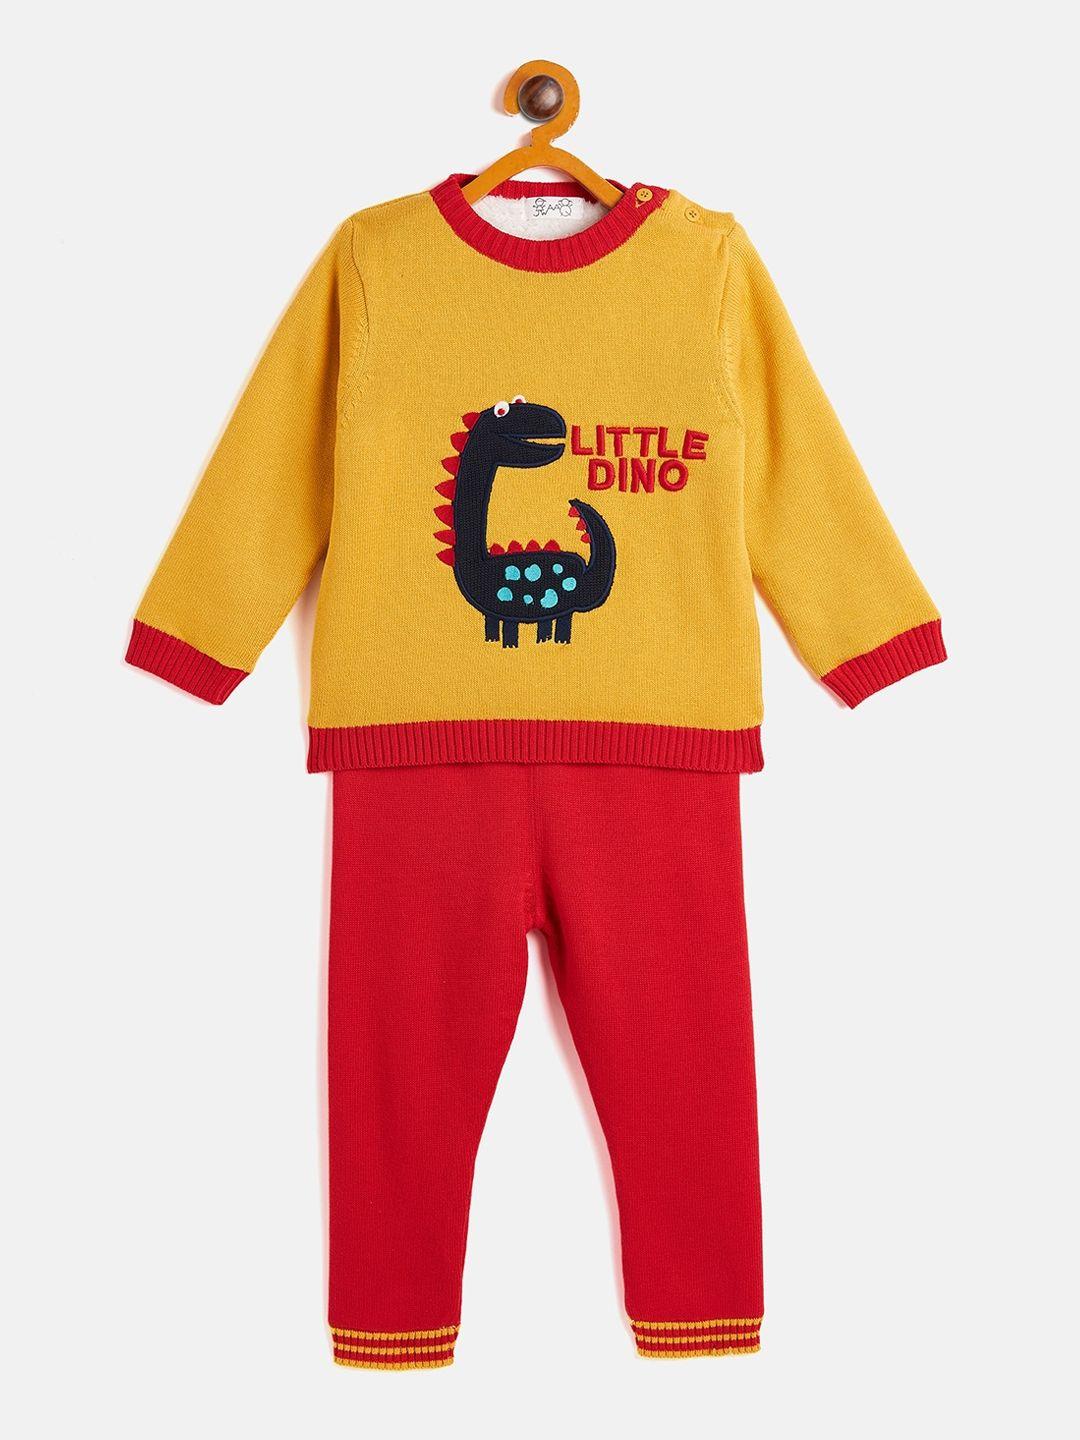 jwaaq unisex kids yellow & red printed top with pyjamas